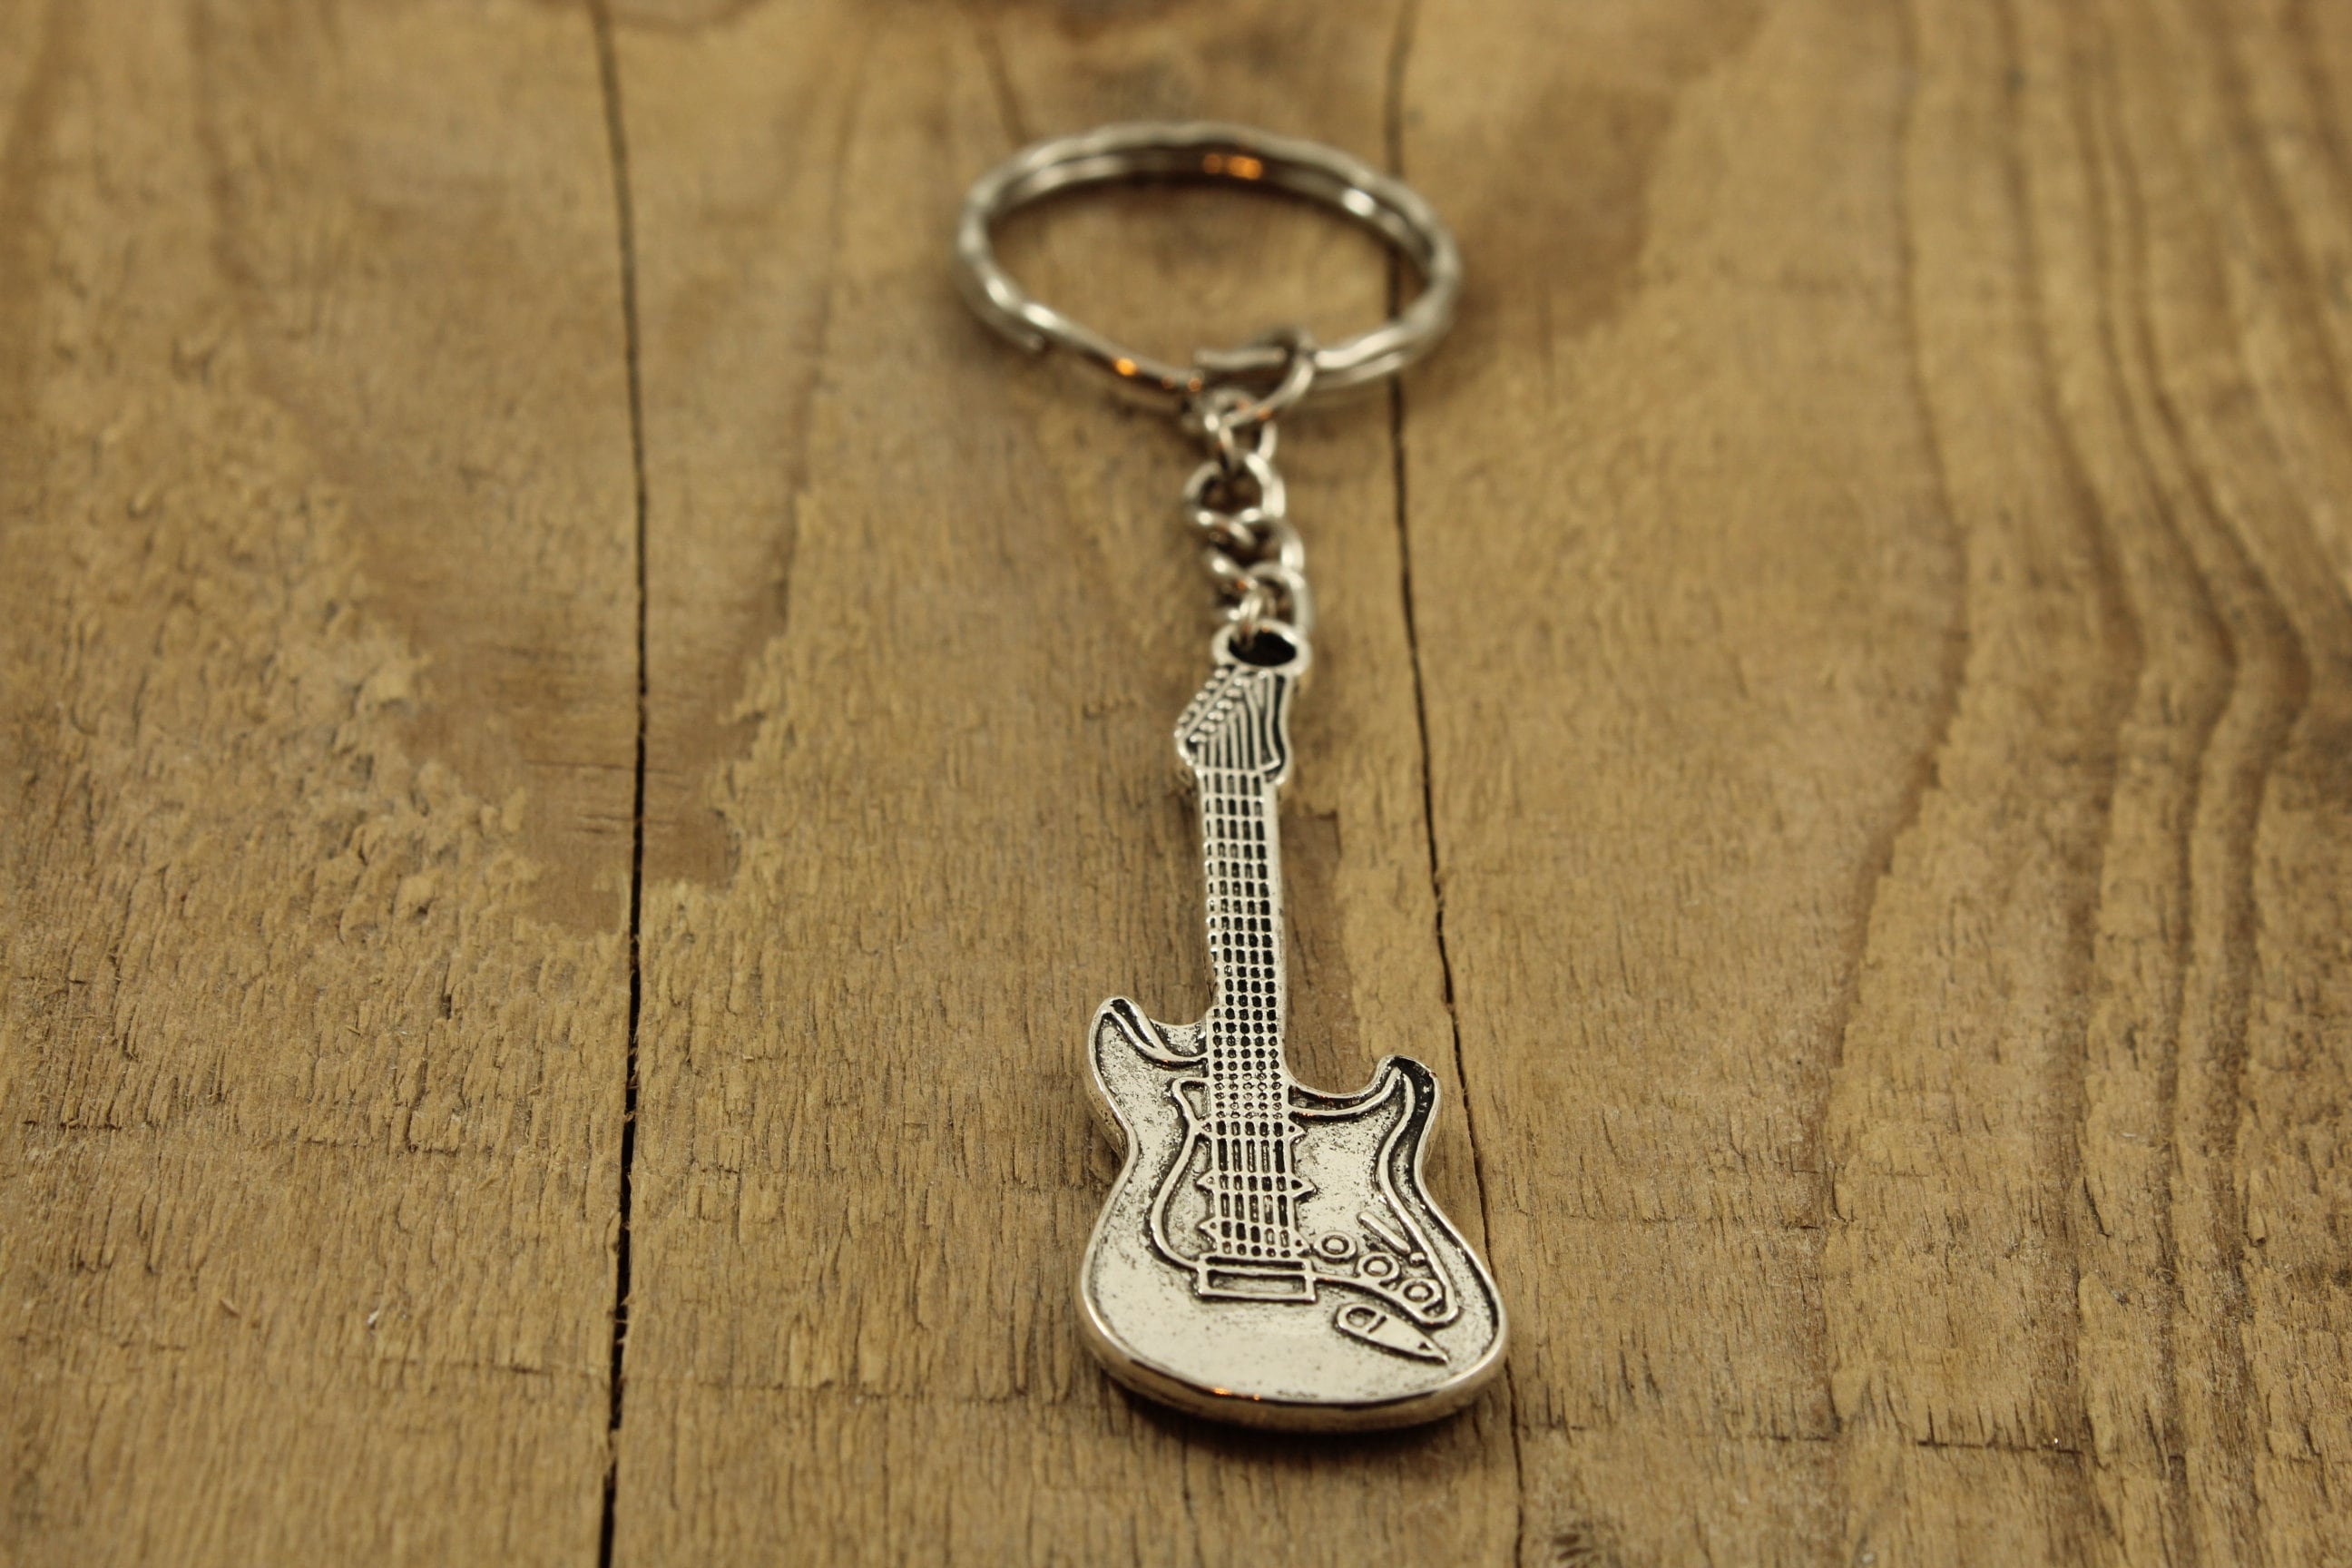 Schlüsselanhänger Gitarre aus massiv Silber 925 Anhänger Schlüssel 